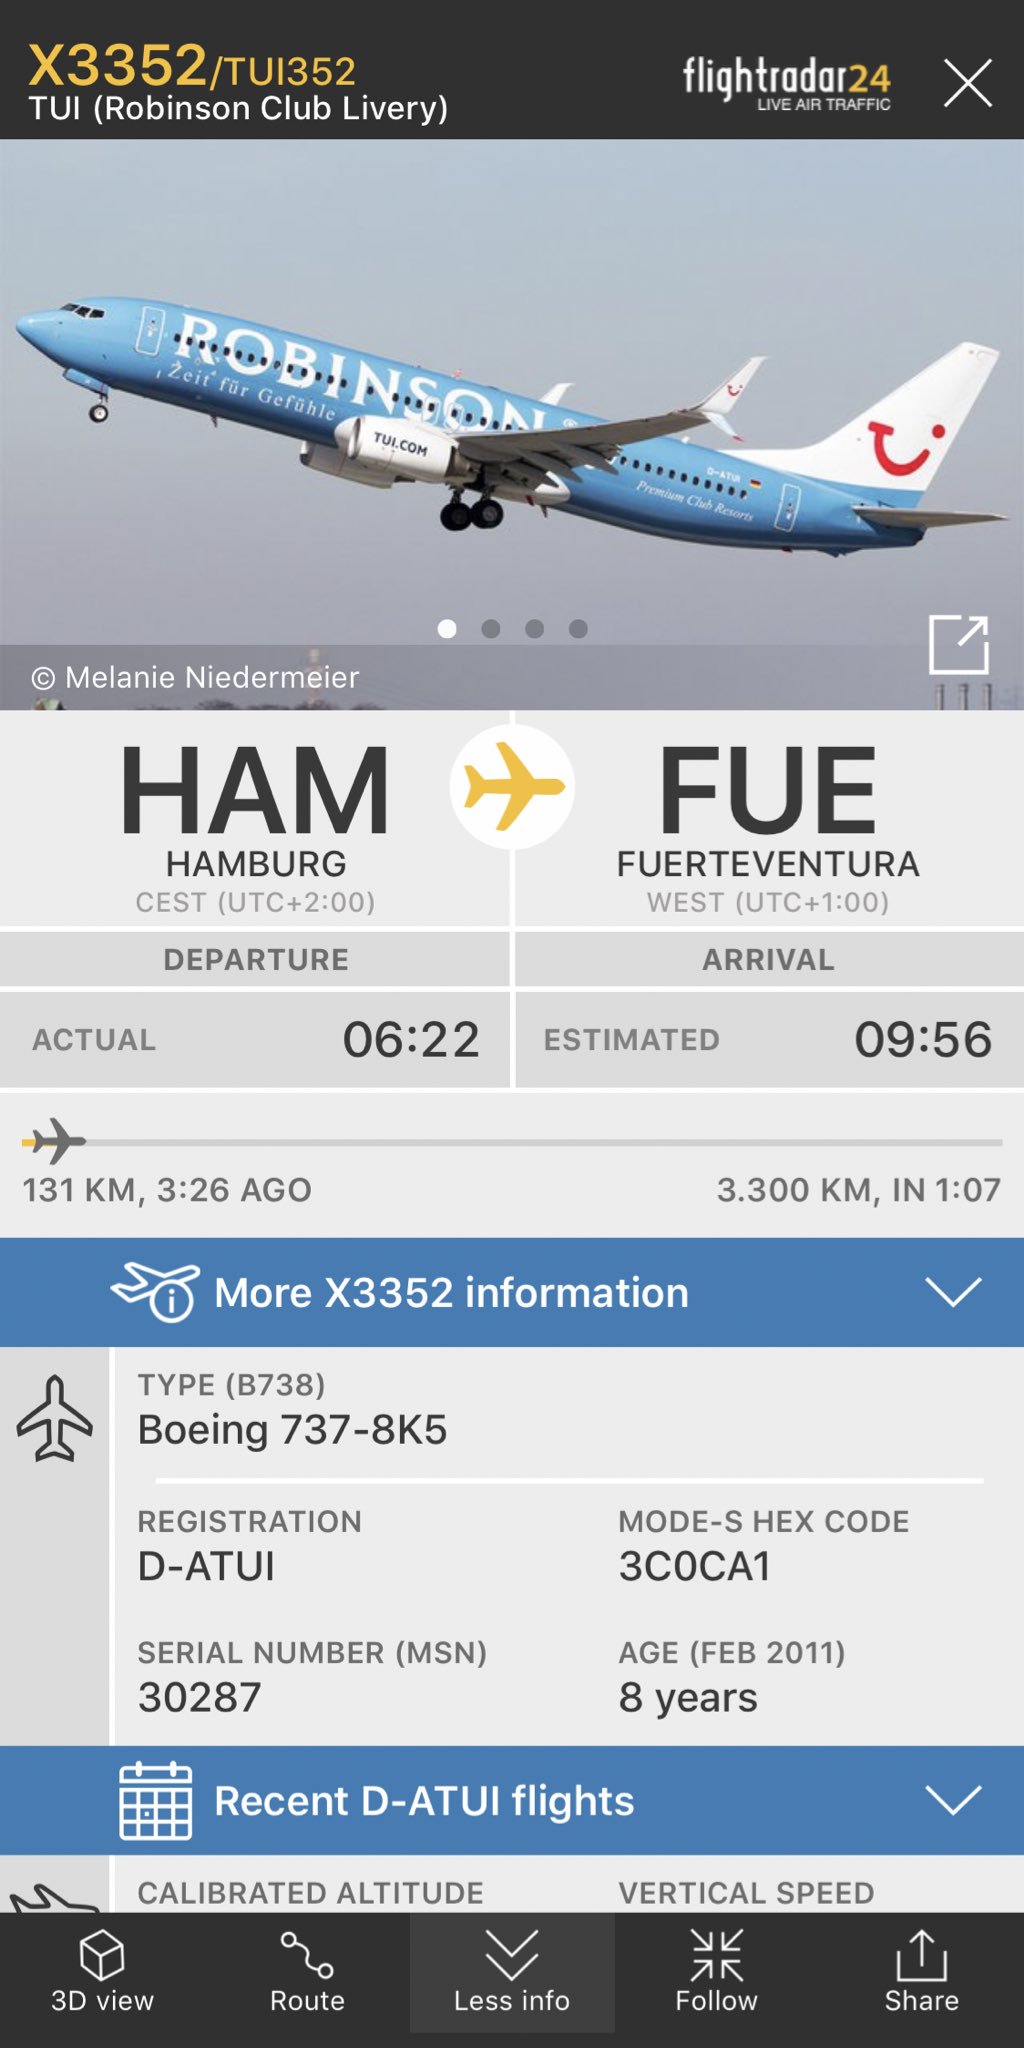 International Flight Network Twitter: "TUI flight #X3352 from to Fuerteventura (FUE) is diverting to Hannover (HAJ) https://t.co/9Y55jkIsij https://t.co/qBc9sFWYD1" / Twitter